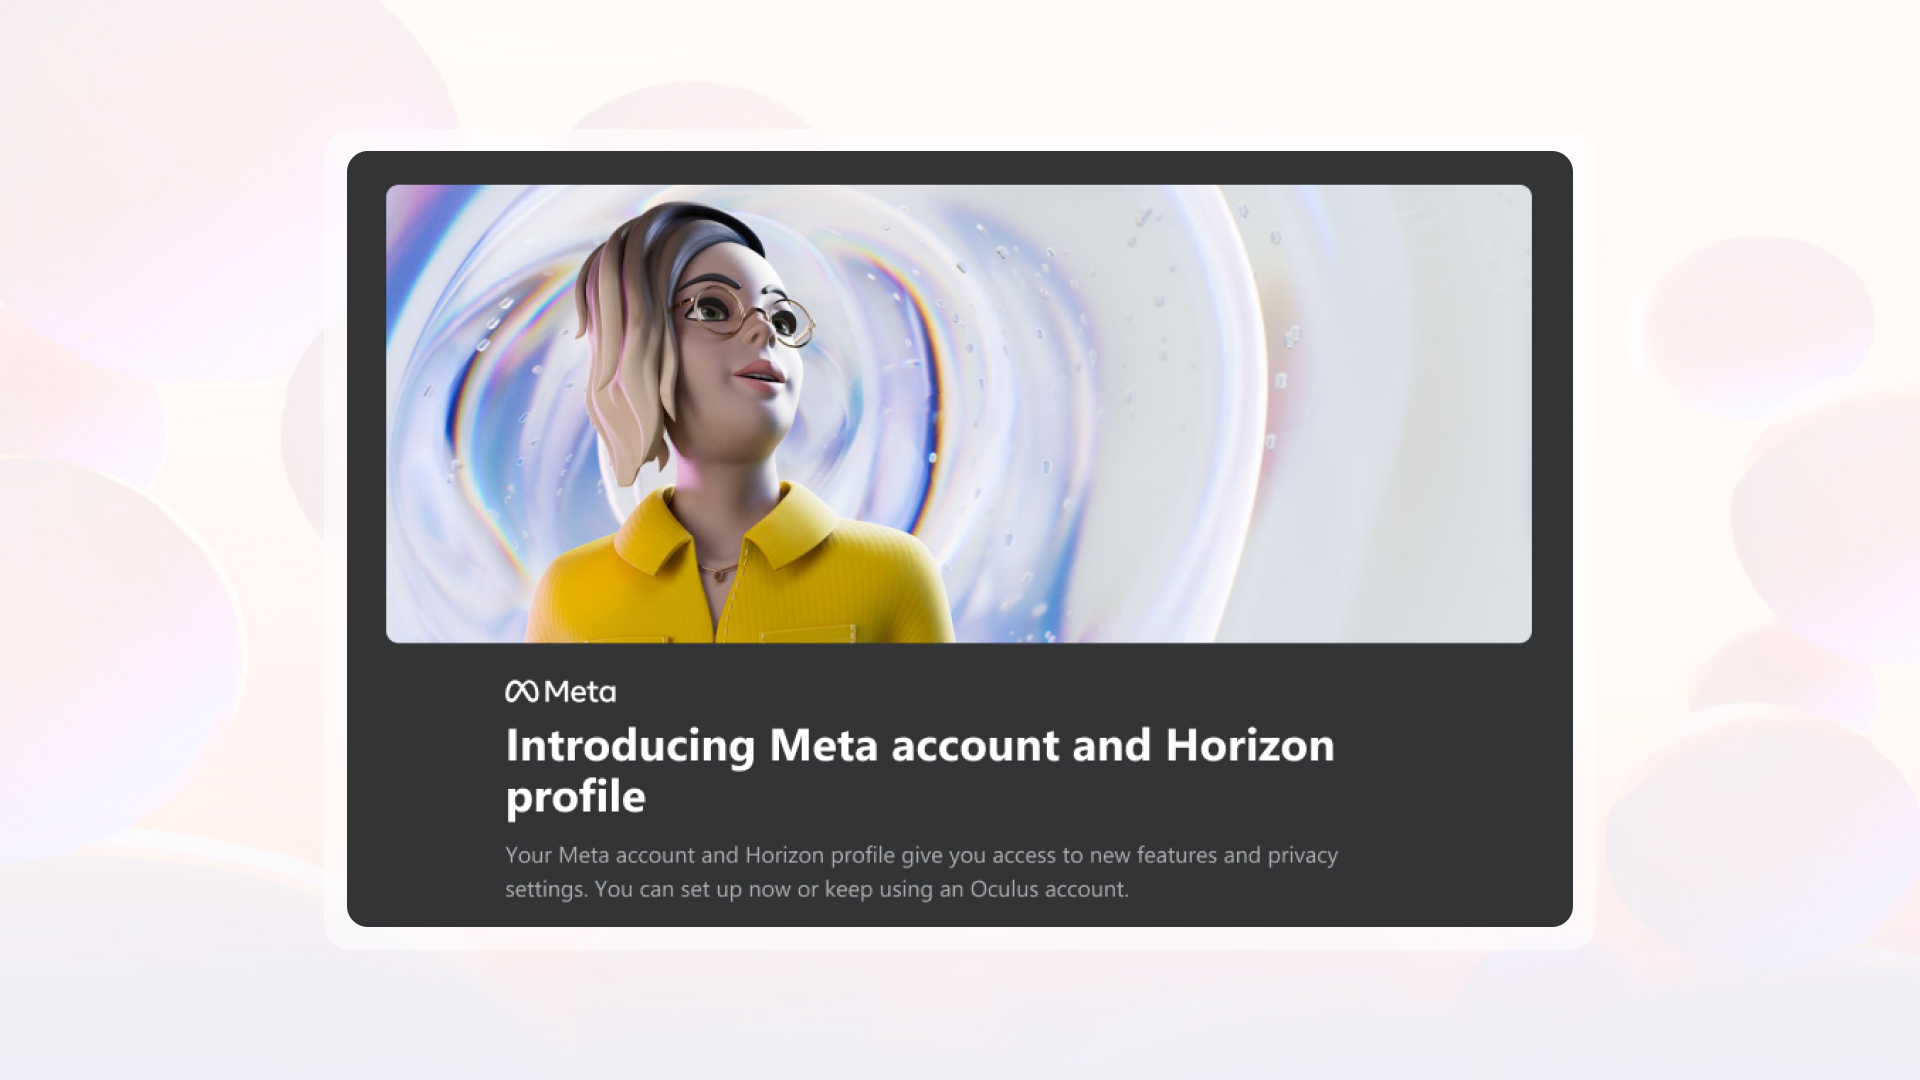 Screenshot of Meta account and Horizon profile introduction page